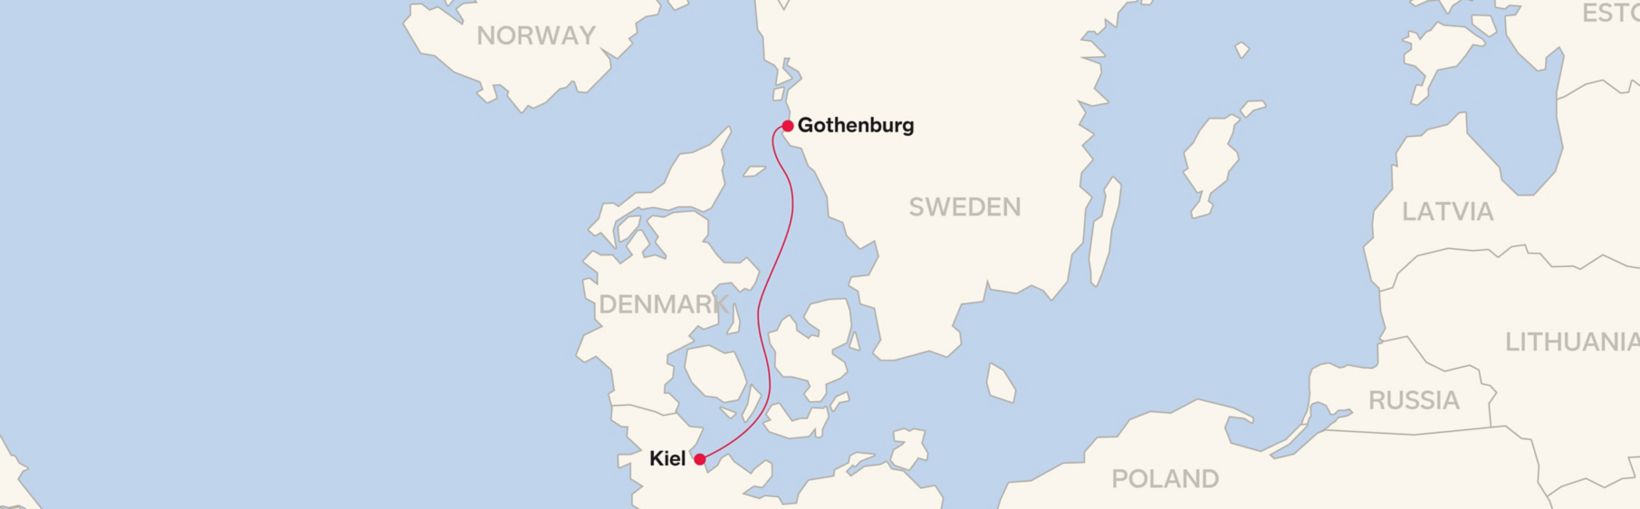 Mappa della rotta per Kiel - Gothenburg